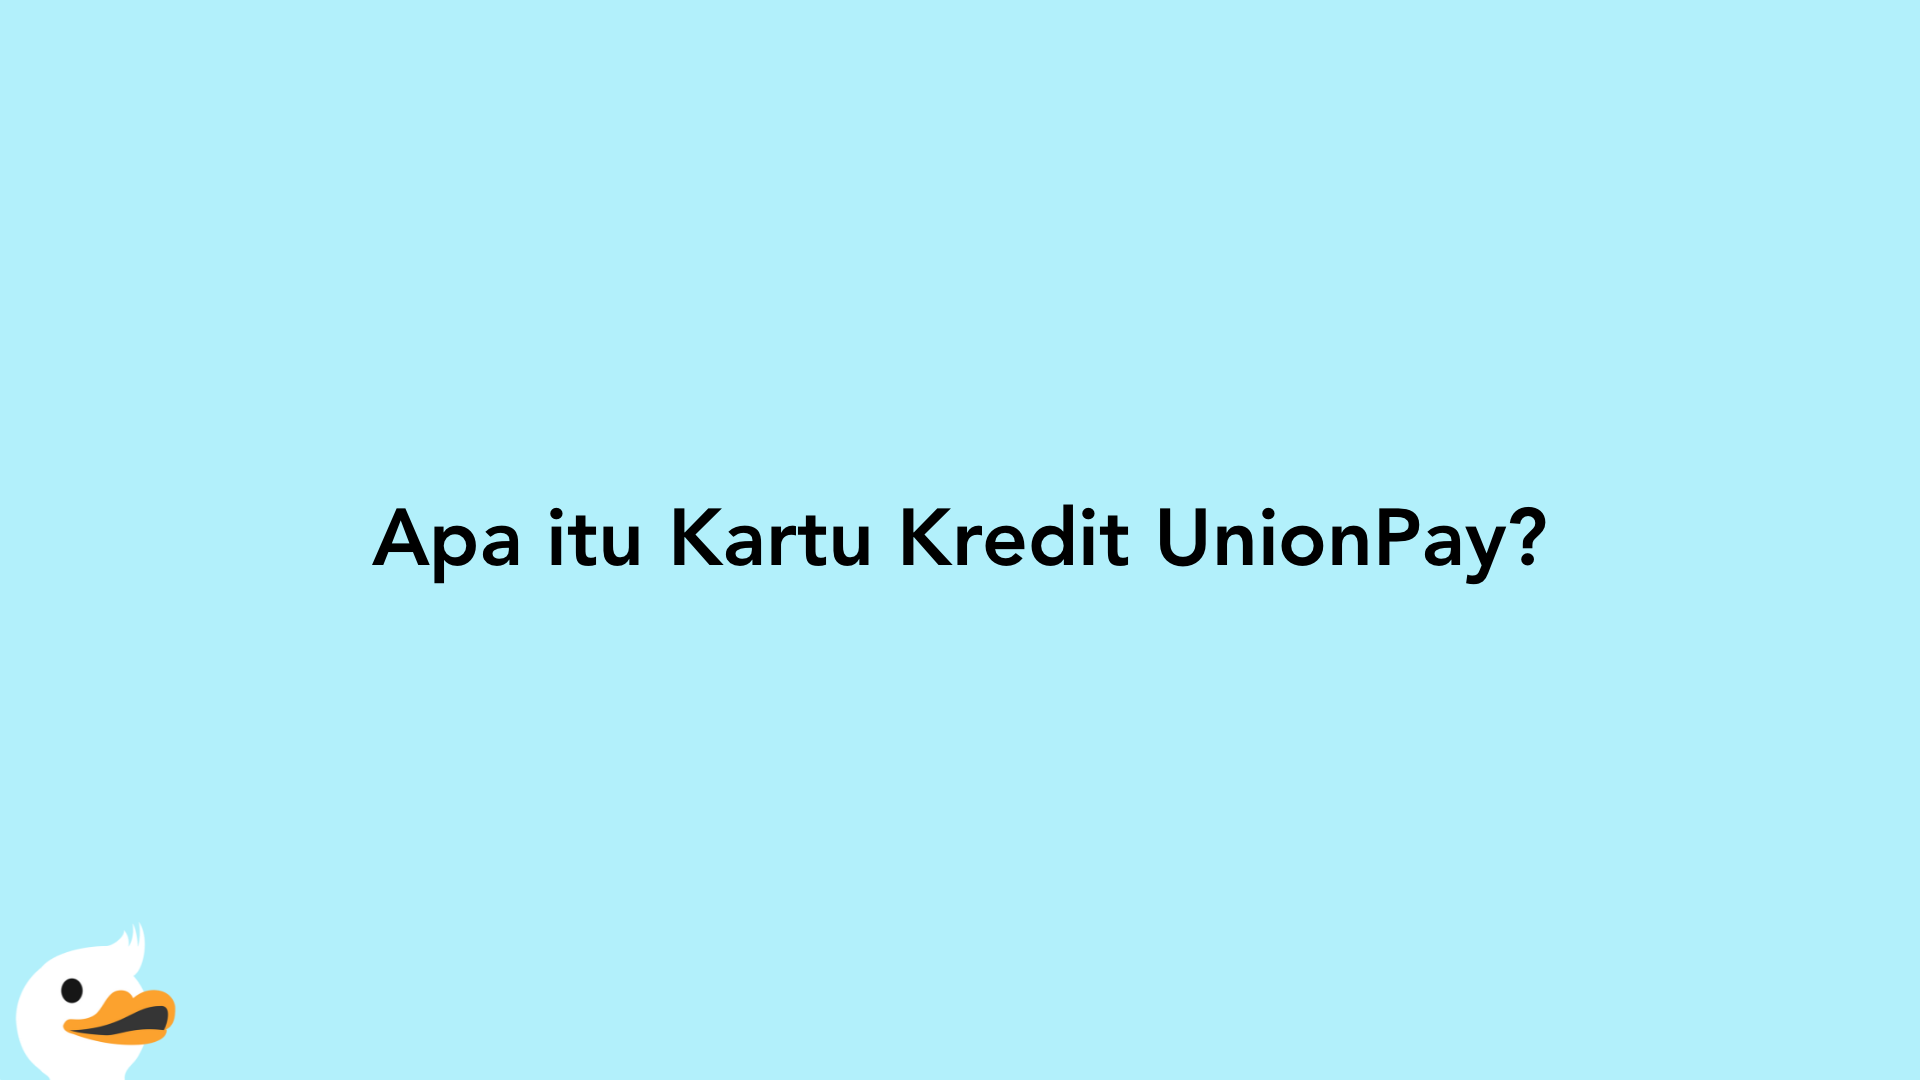 Apa itu Kartu Kredit UnionPay?